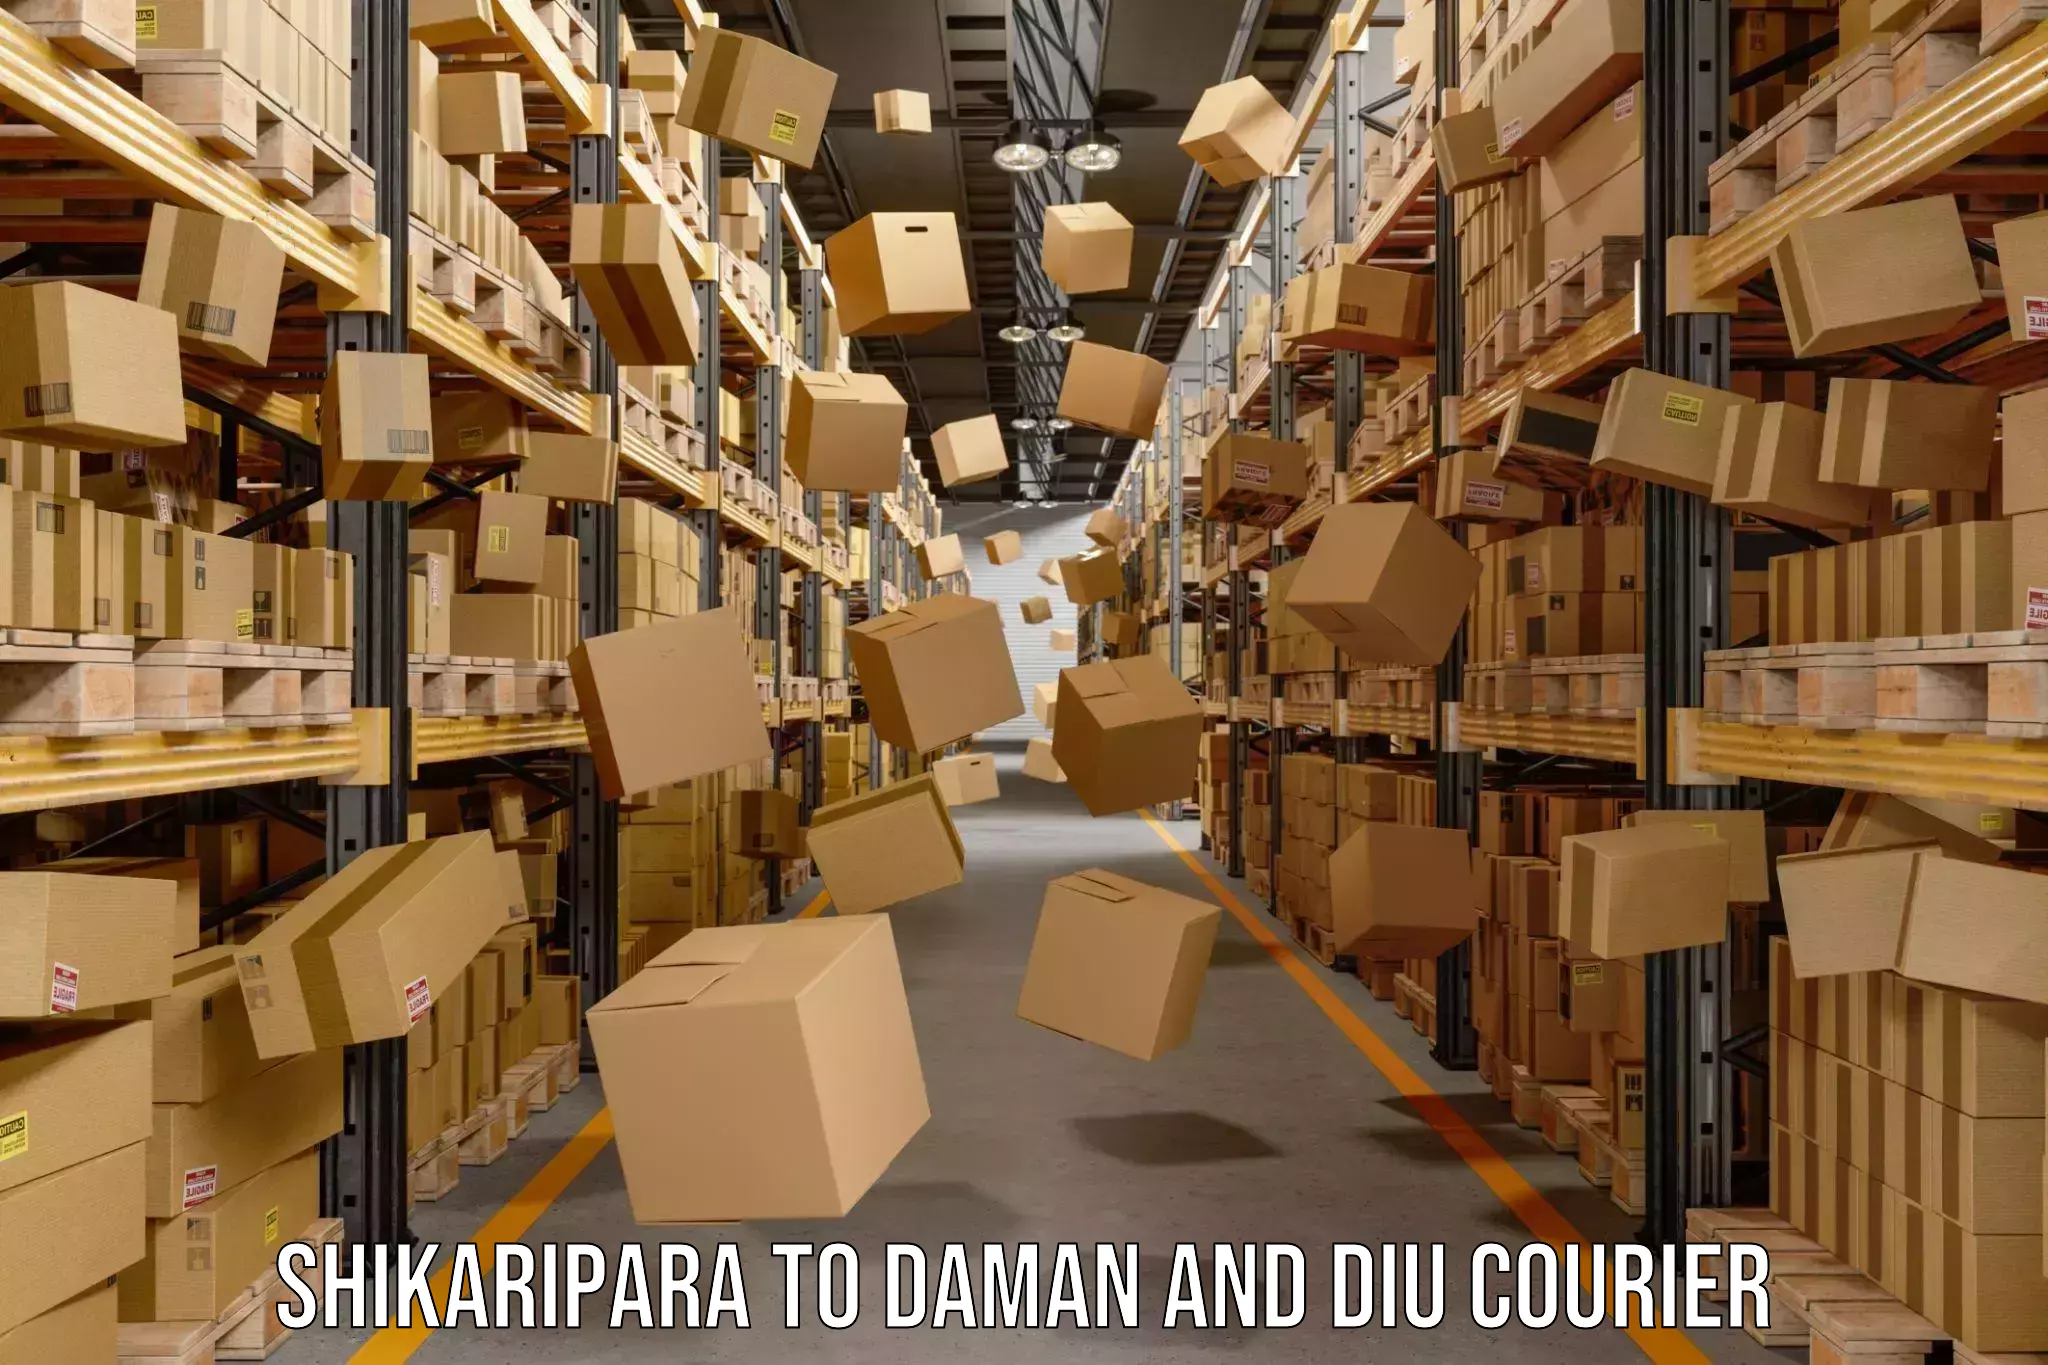 Courier service comparison Shikaripara to Daman and Diu